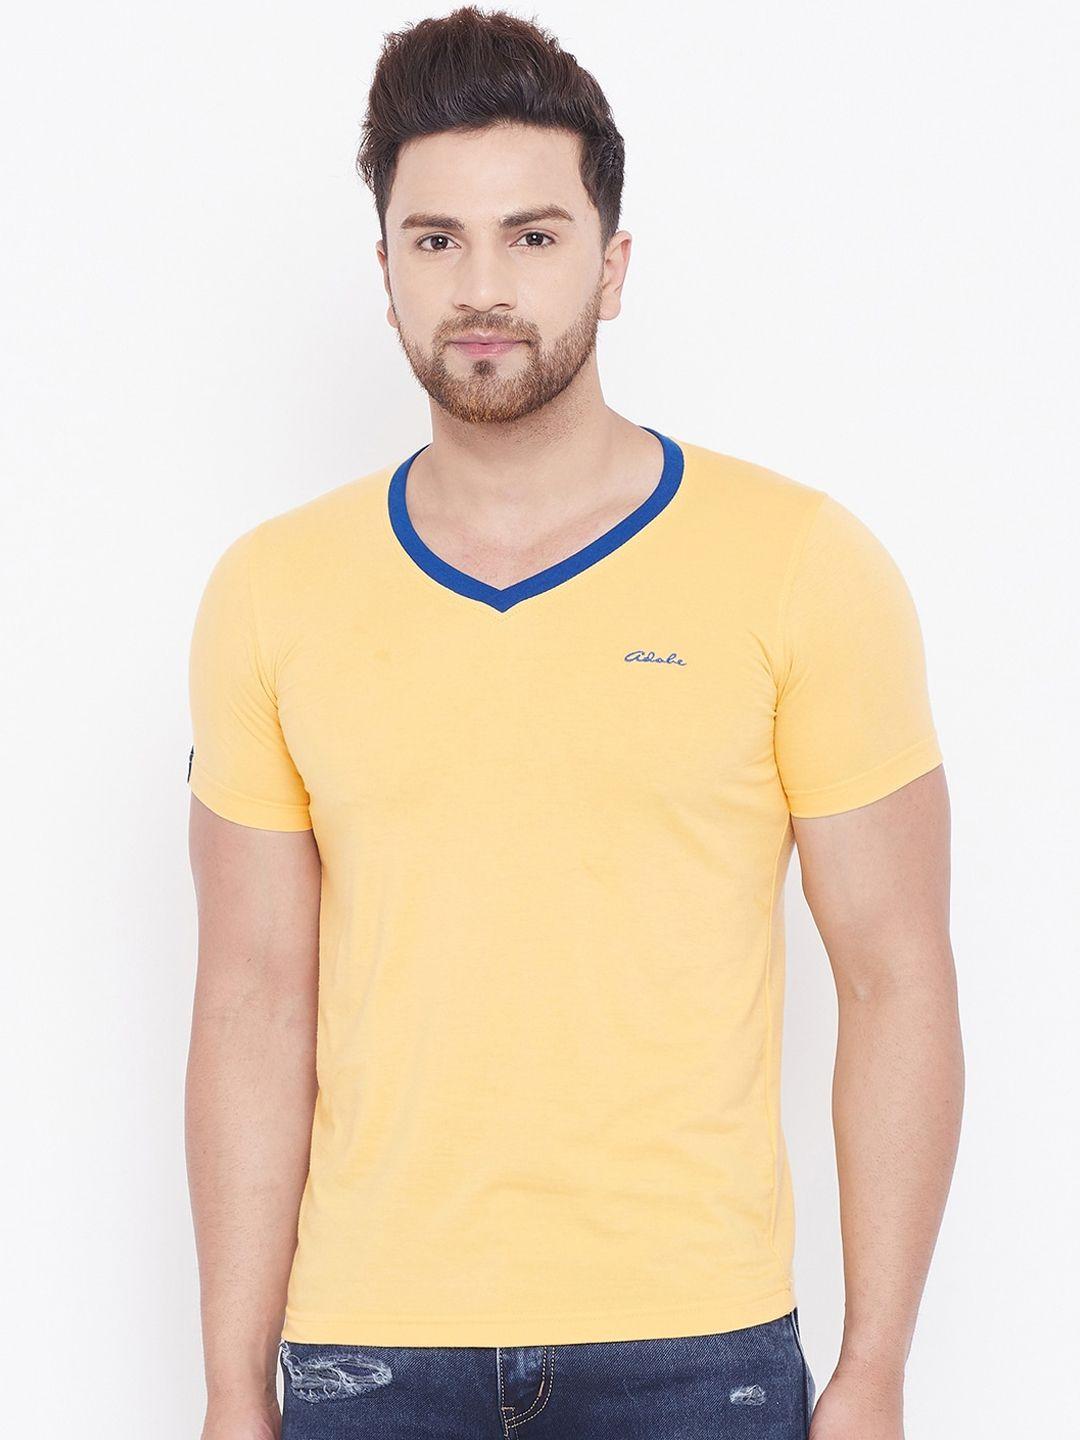 adobe-men-yellow-solid-v-neck-t-shirt